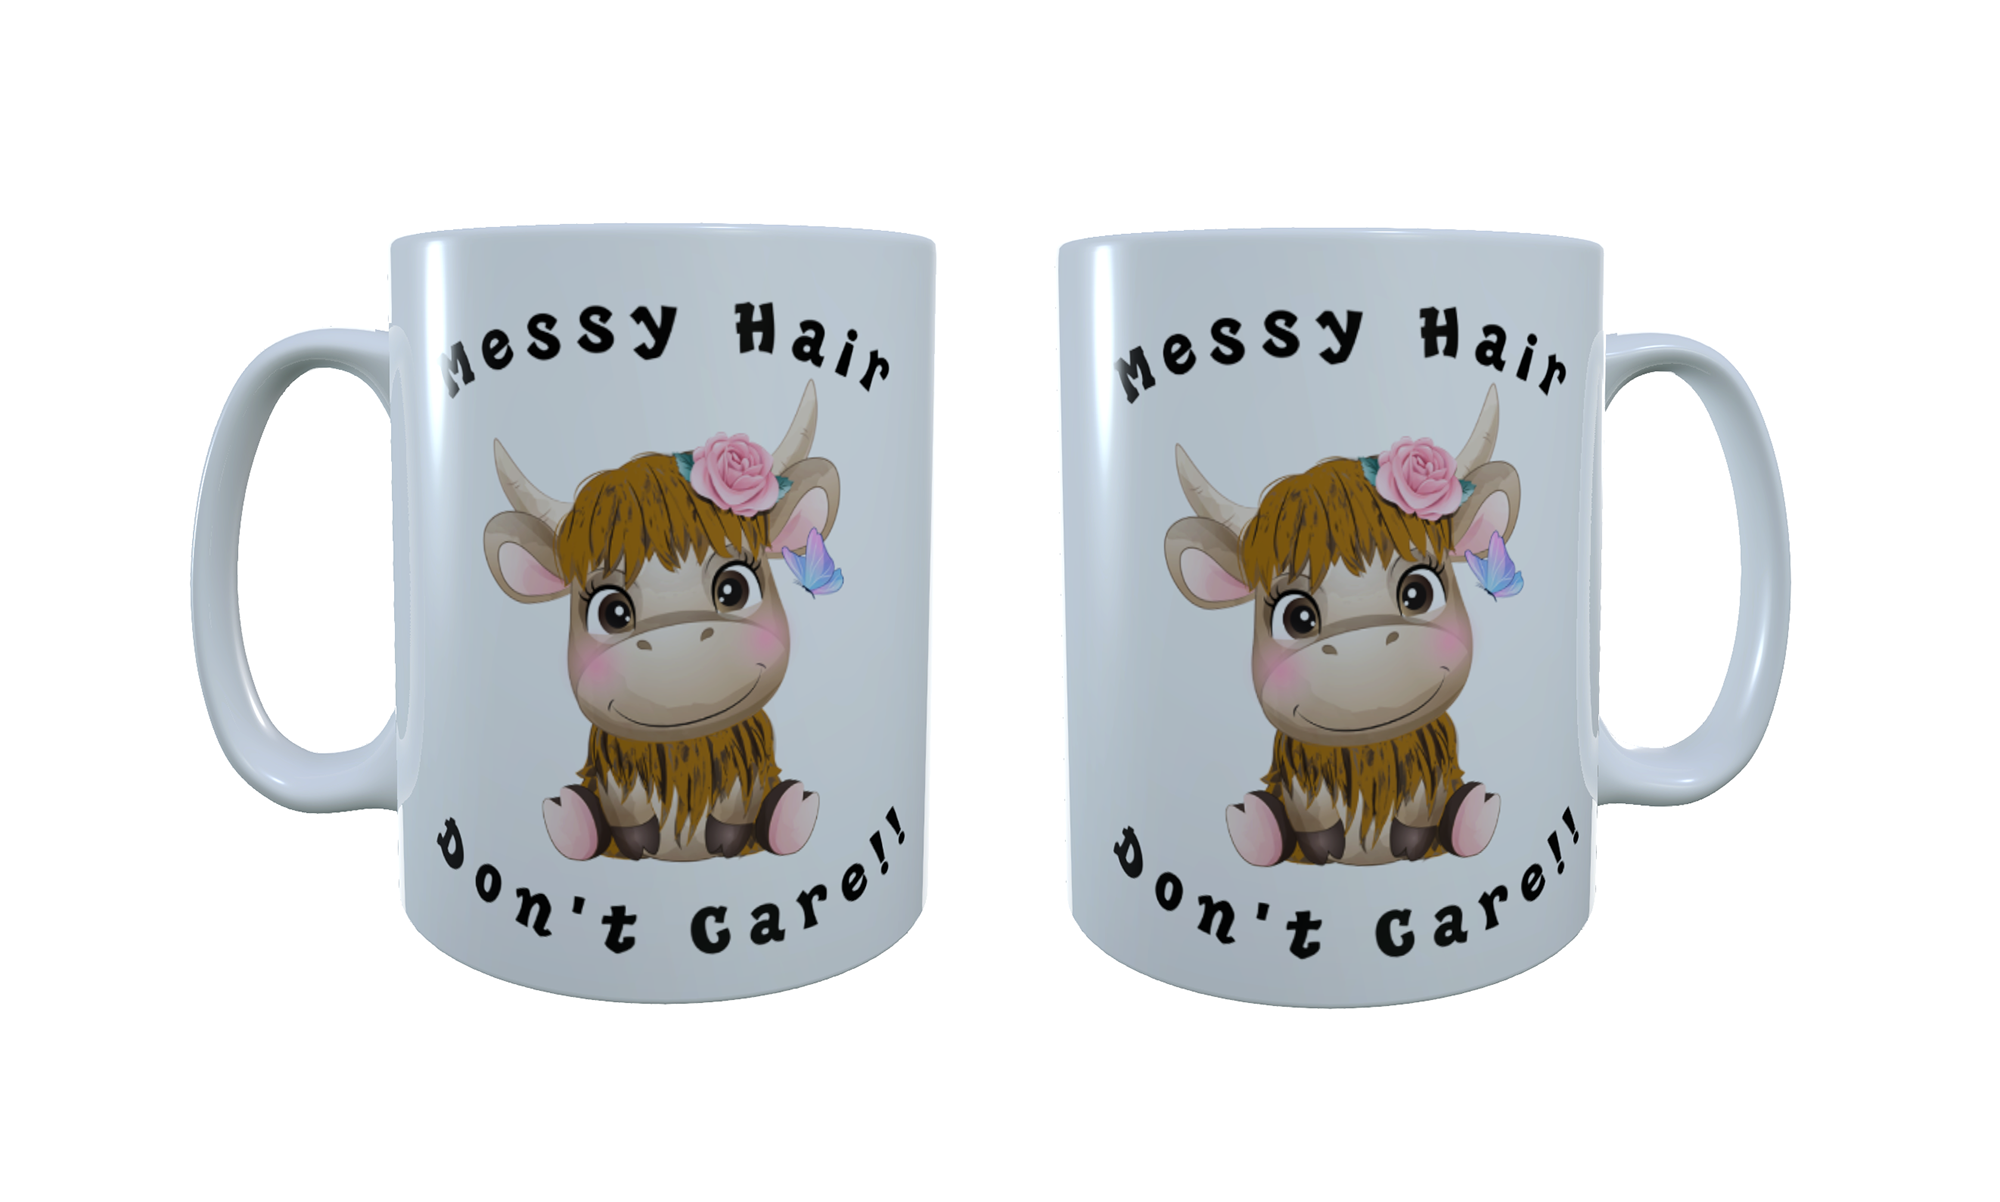 Highland Cow Ceramic Mug, Highland Cow Mug, Highland Cow Latte